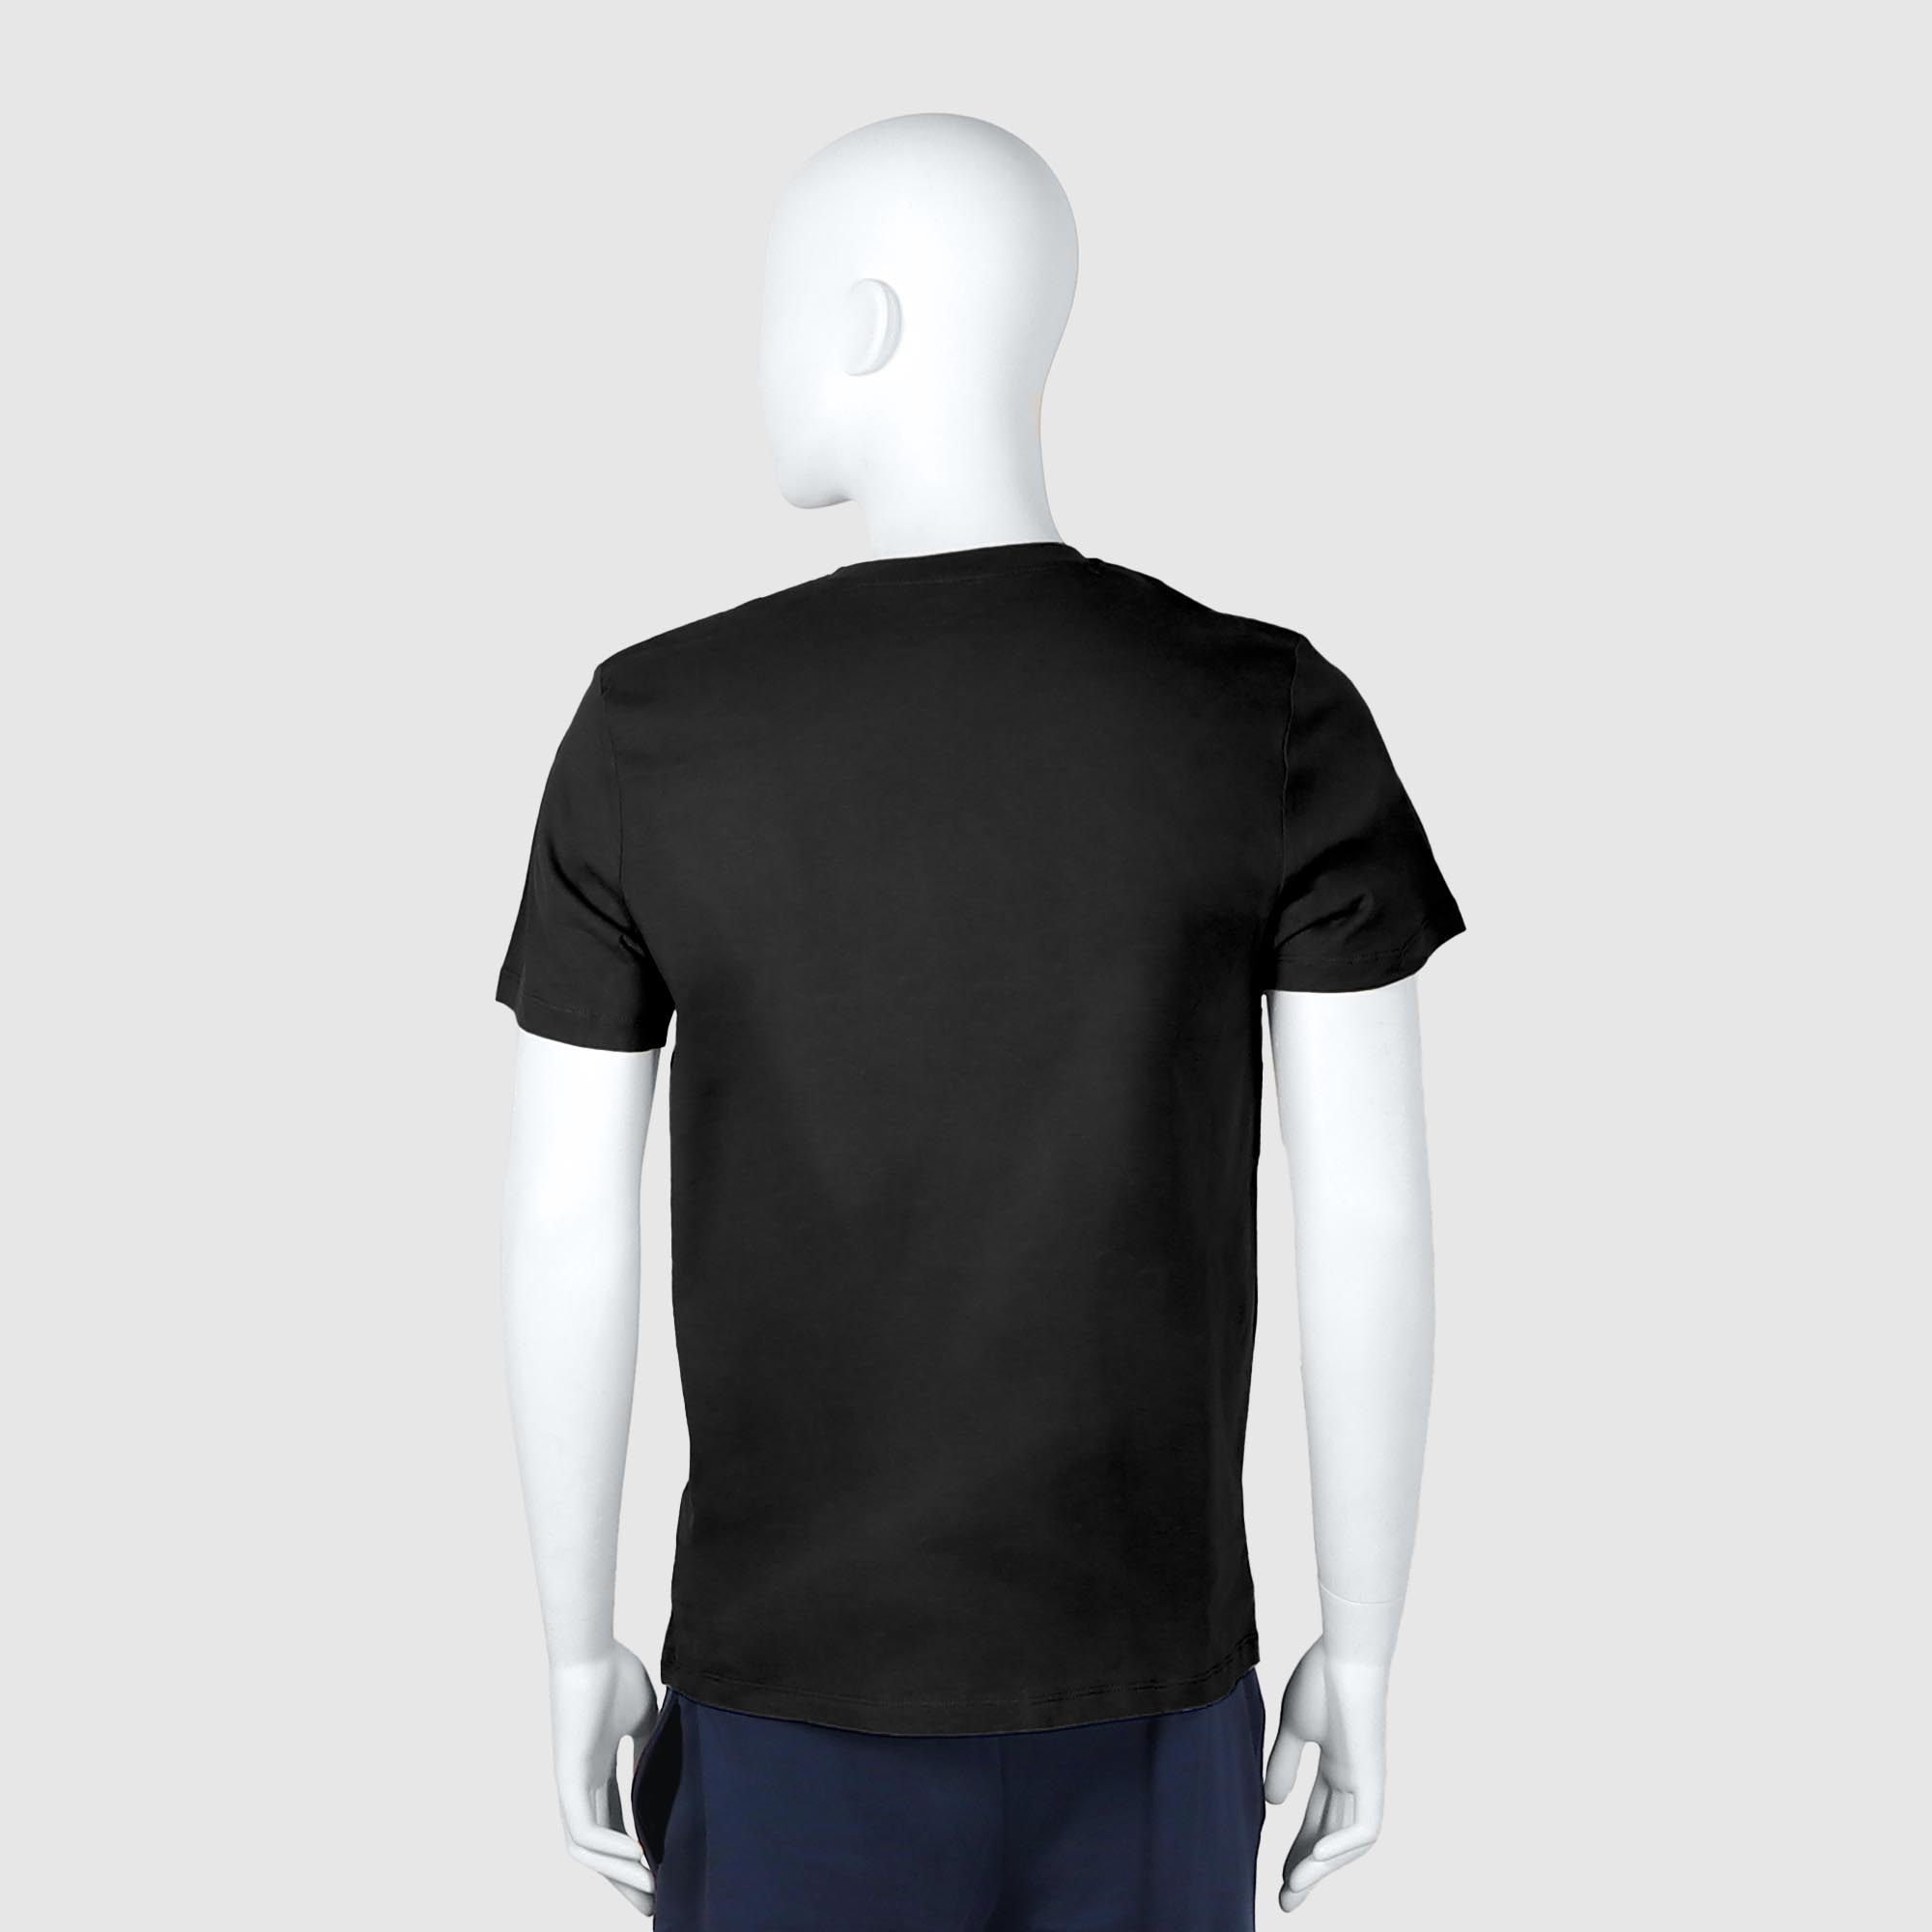 Мужская футболка Diva Teks чёрная (DTD-01), цвет чёрный, размер 44-46 - фото 2